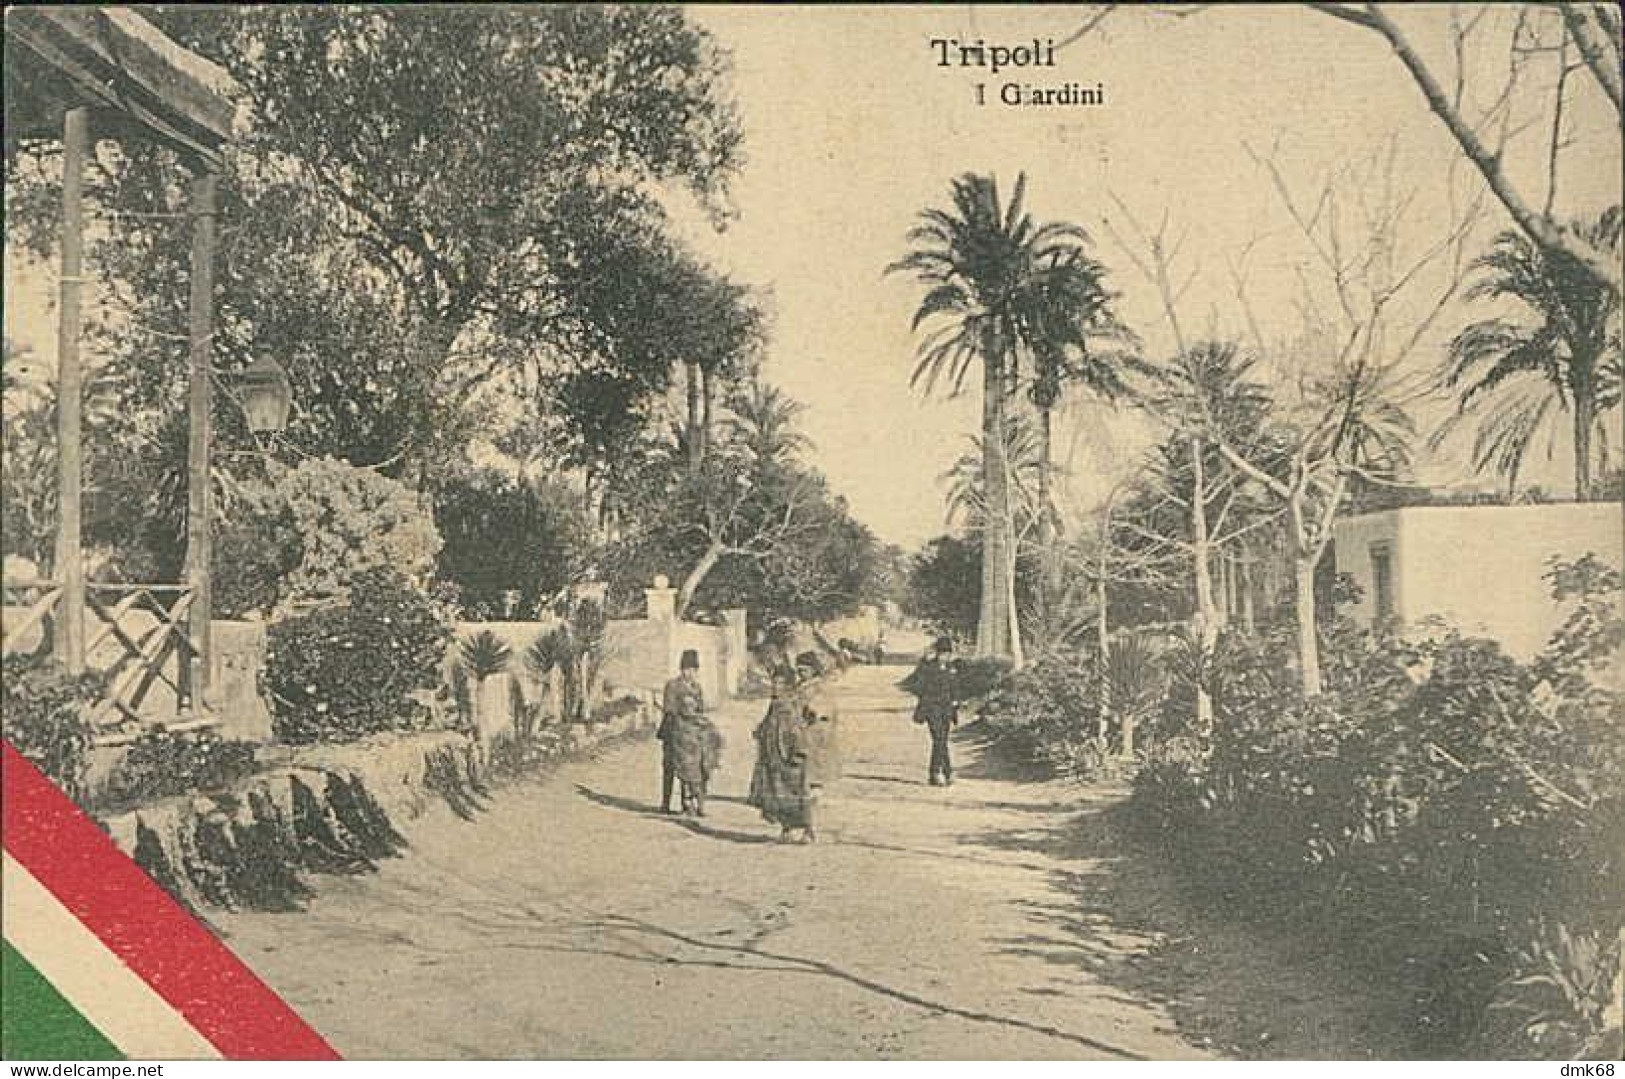 LIBIA / LIBYA - TRIPOLI - I GIARDINI - EDIZIONE RAGOZINO - SPEDITA 1913 (12464) - Libyen